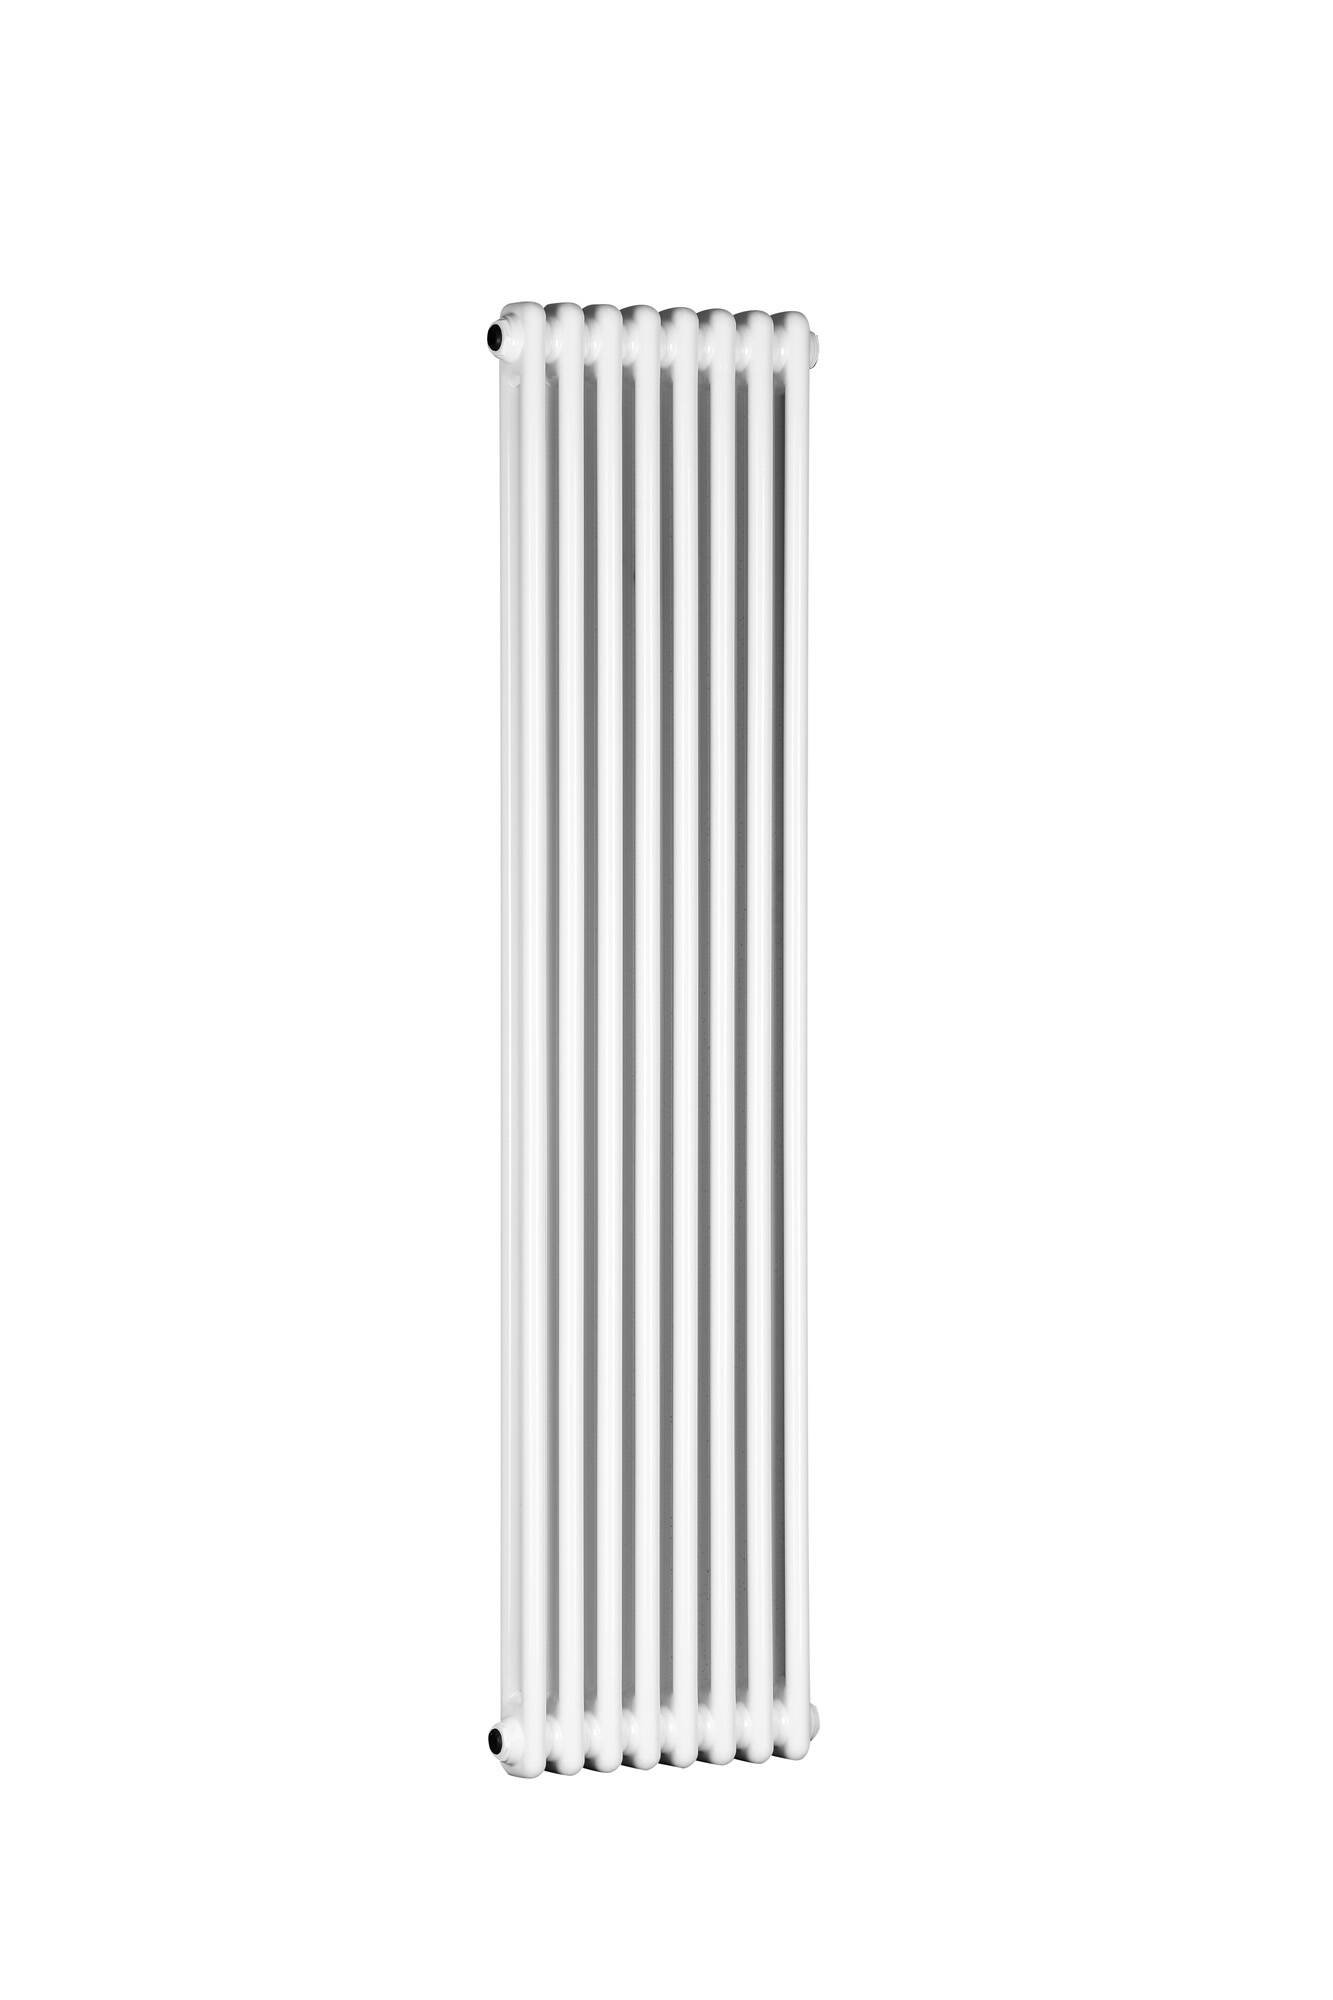 TradeRad Value Vertical Column Radiators